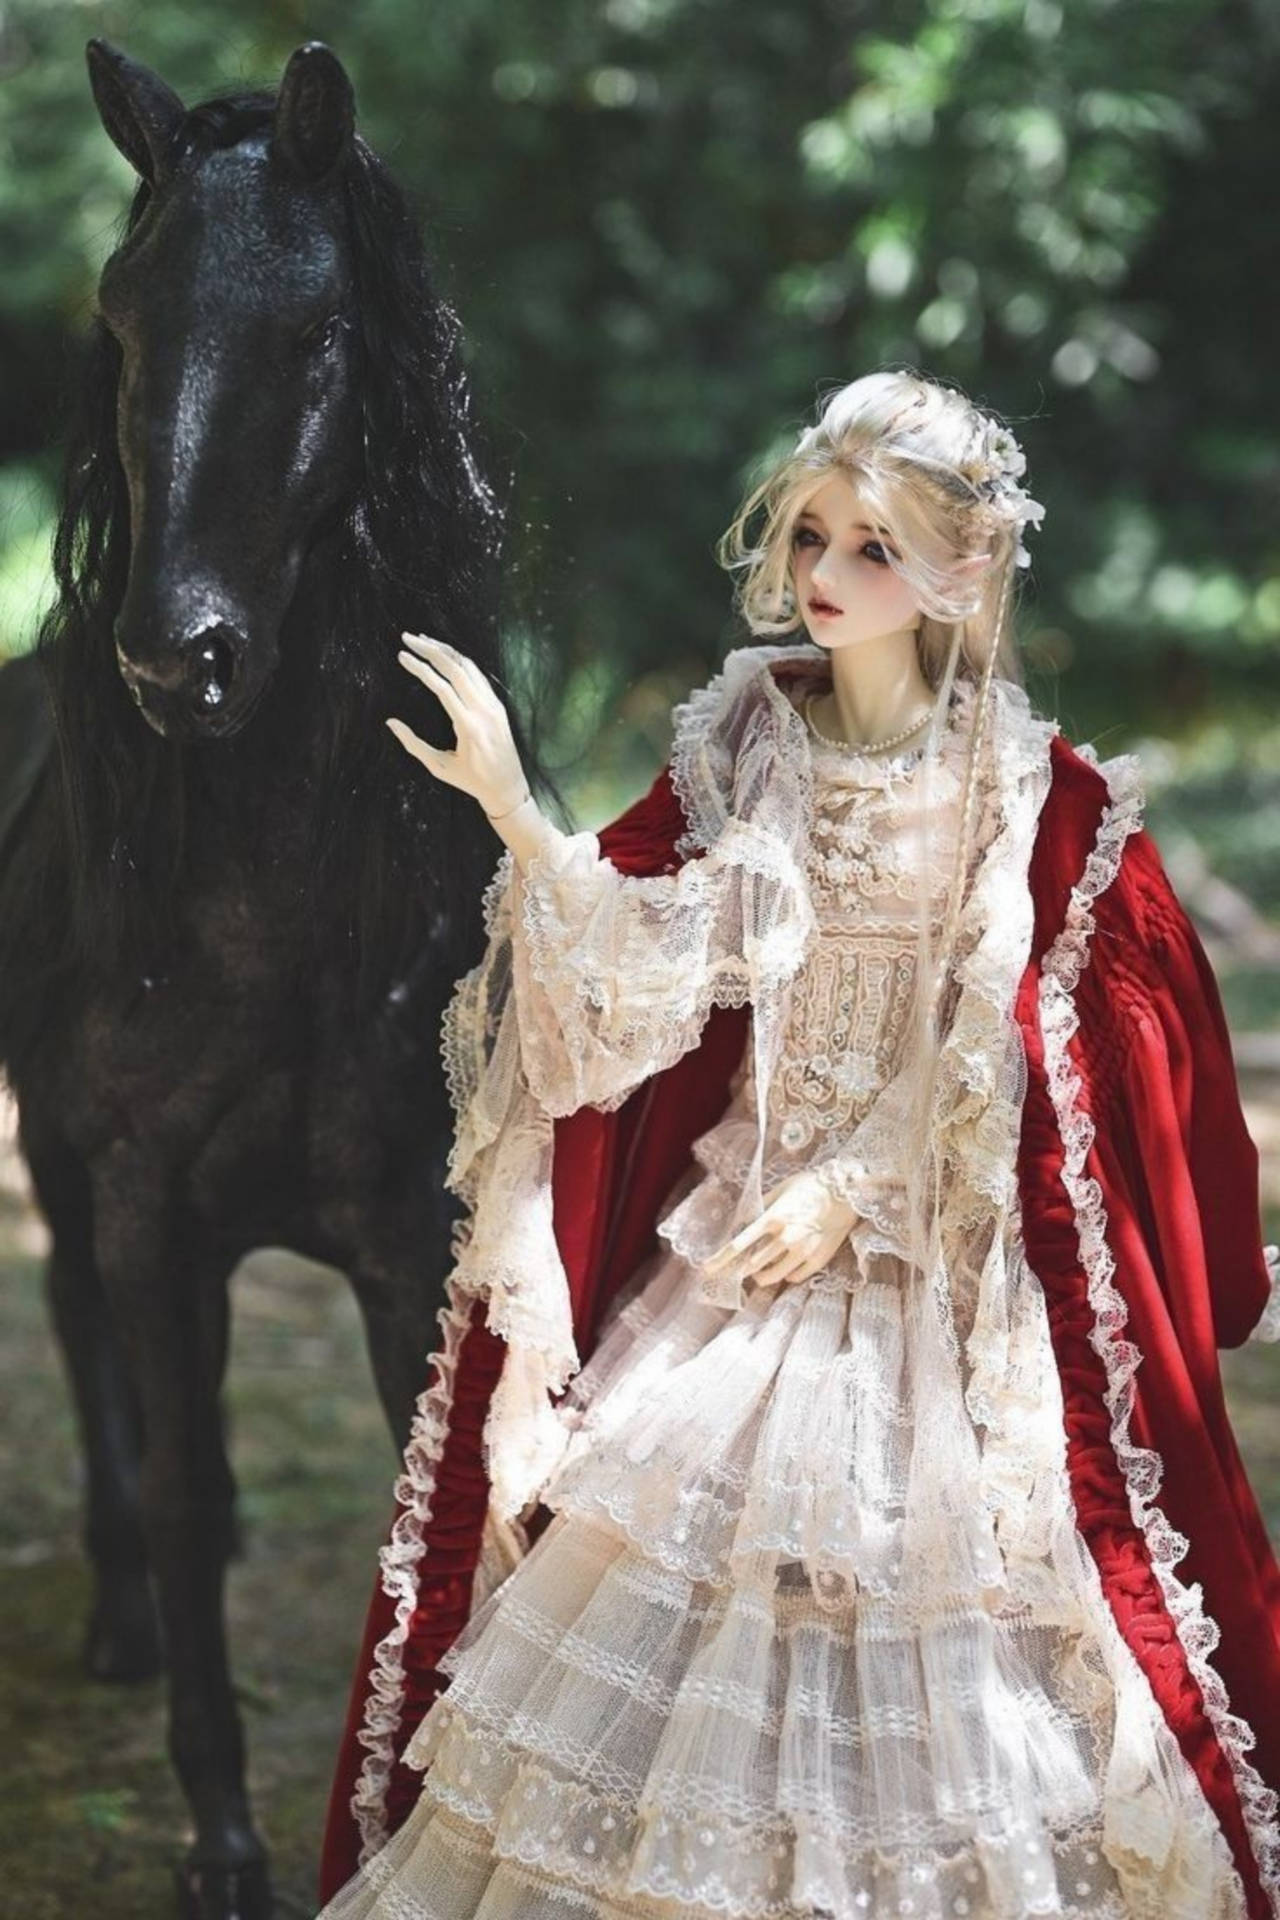 Barbie Doll Elf Queen Beside Black Horse